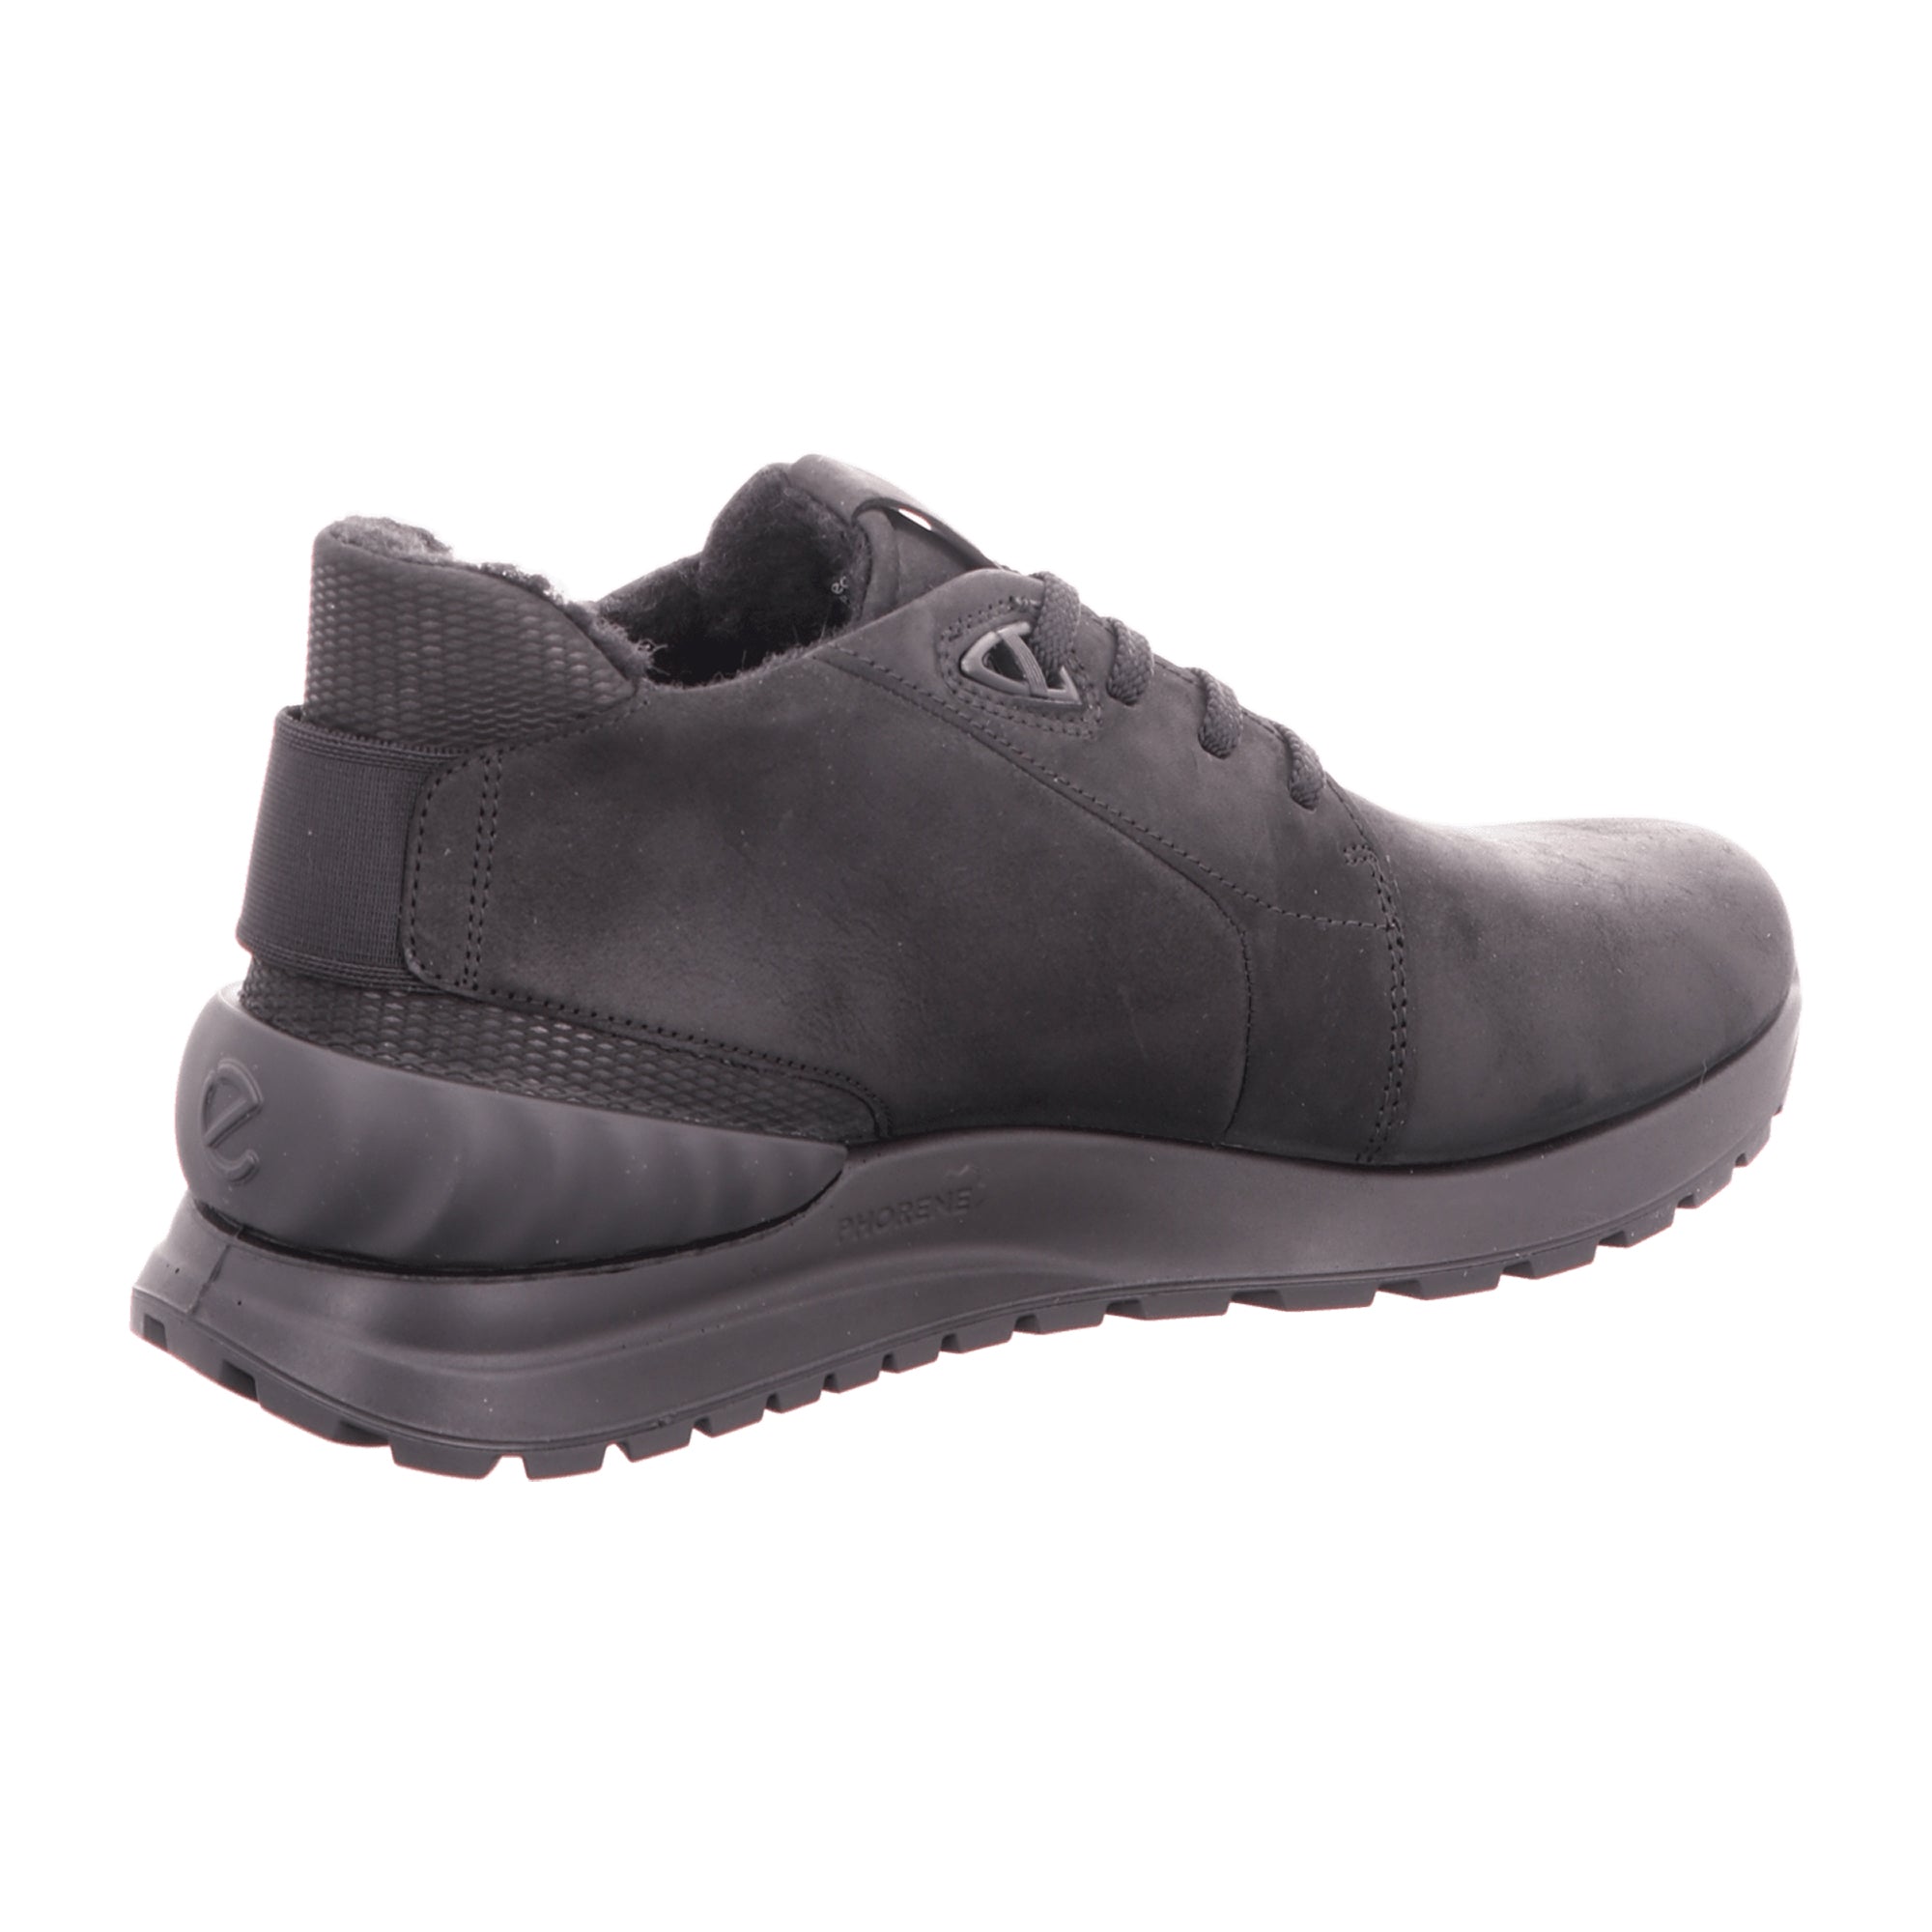 Ecco Astir Men's Sneakers - Durable, Stylish Black Leather